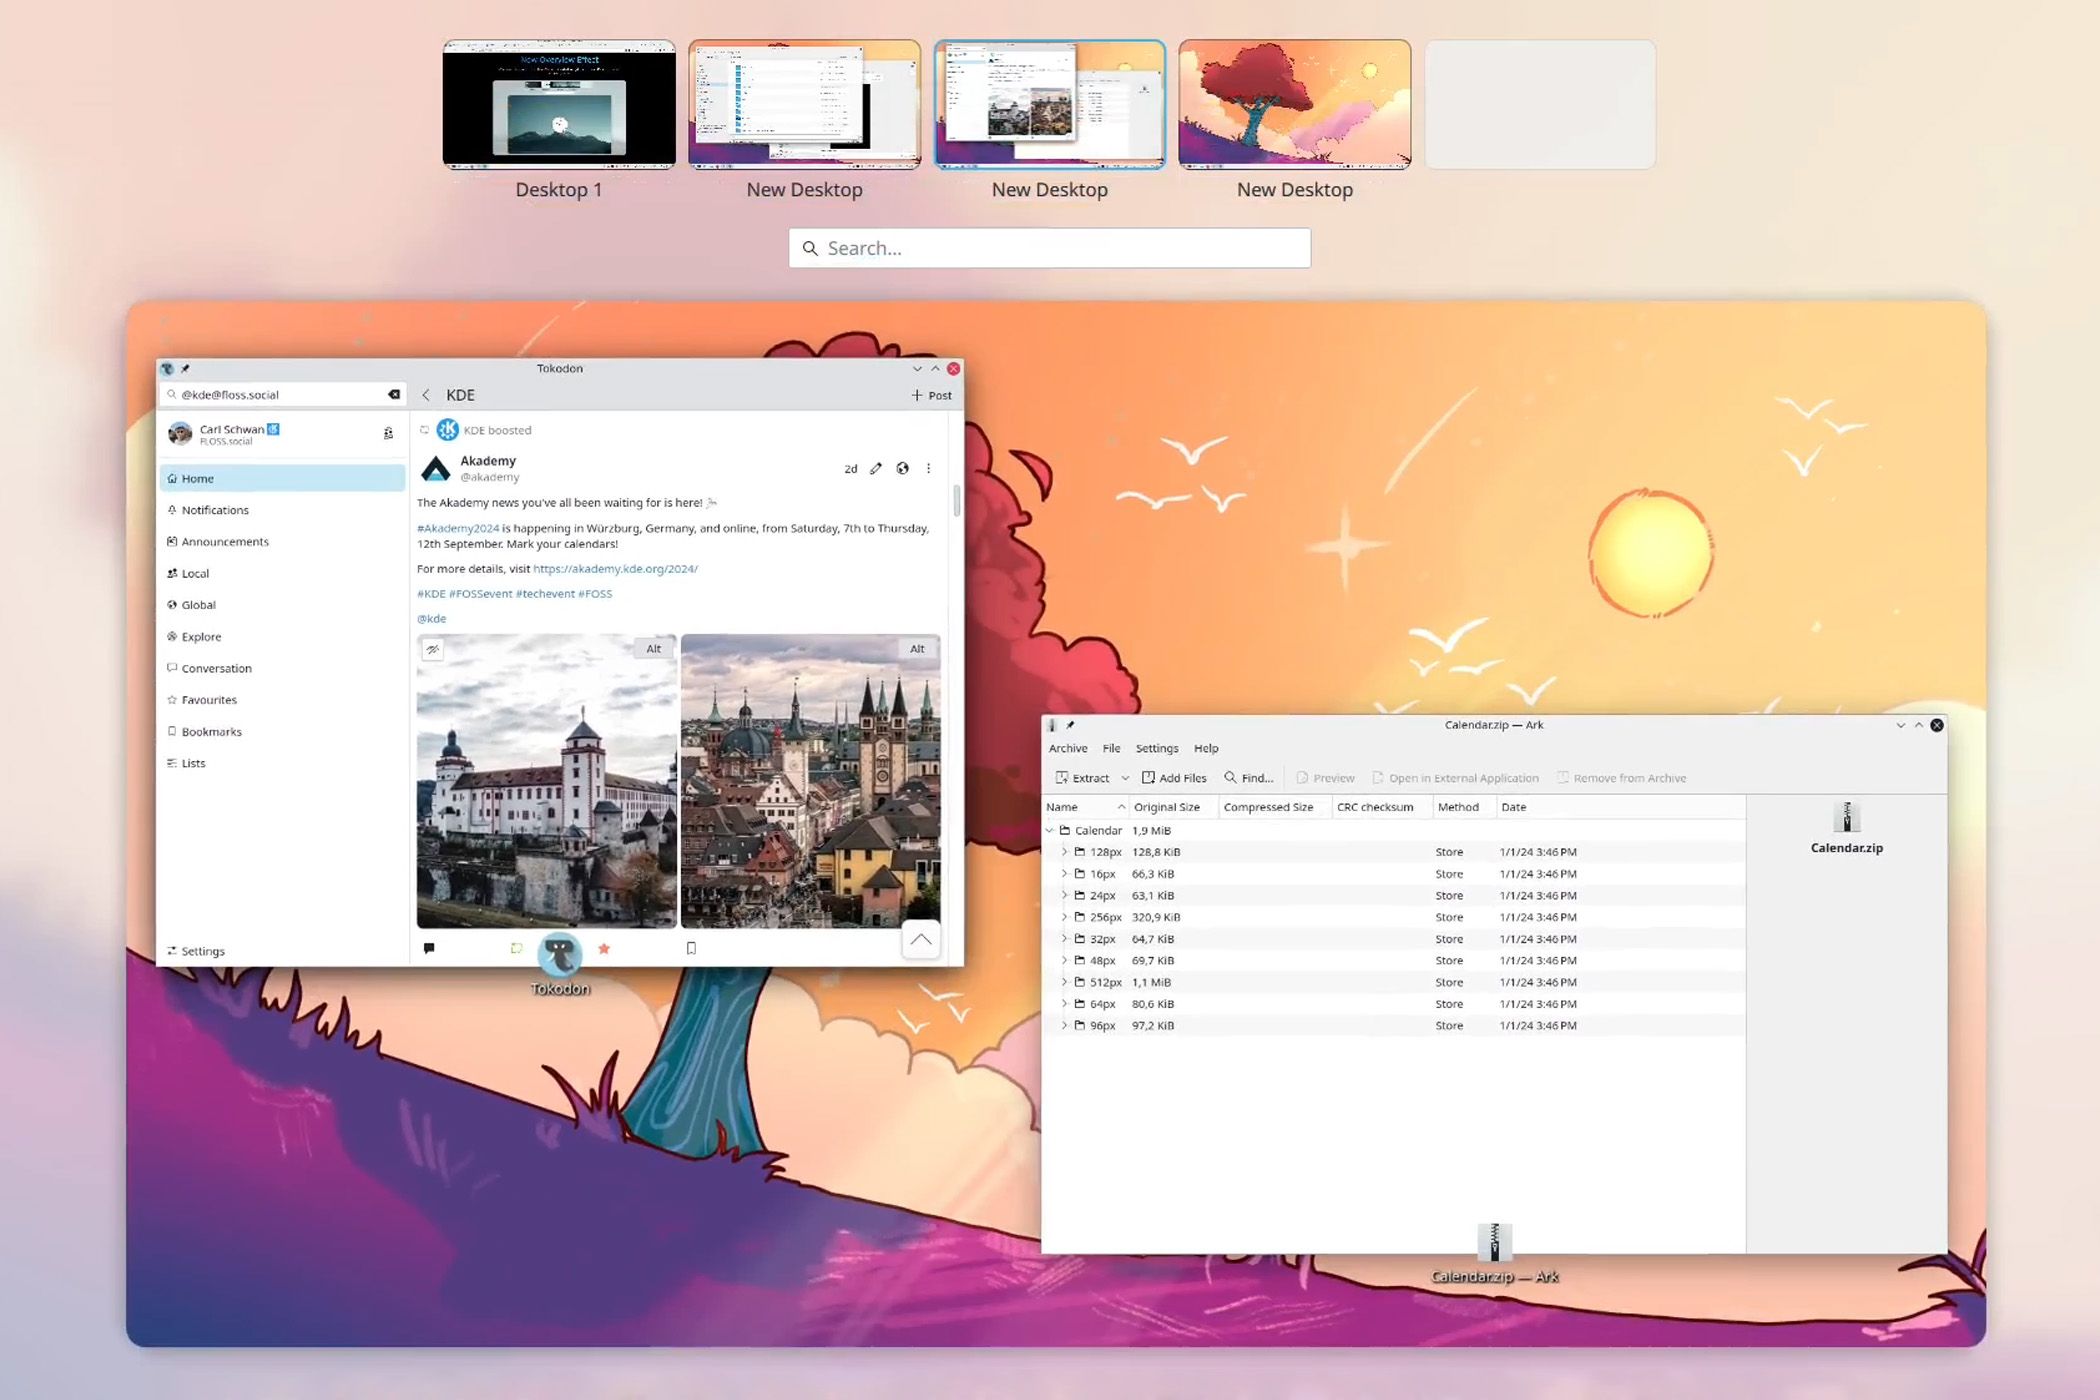 Screenshot of KDE Plasma desktop with two windows open.